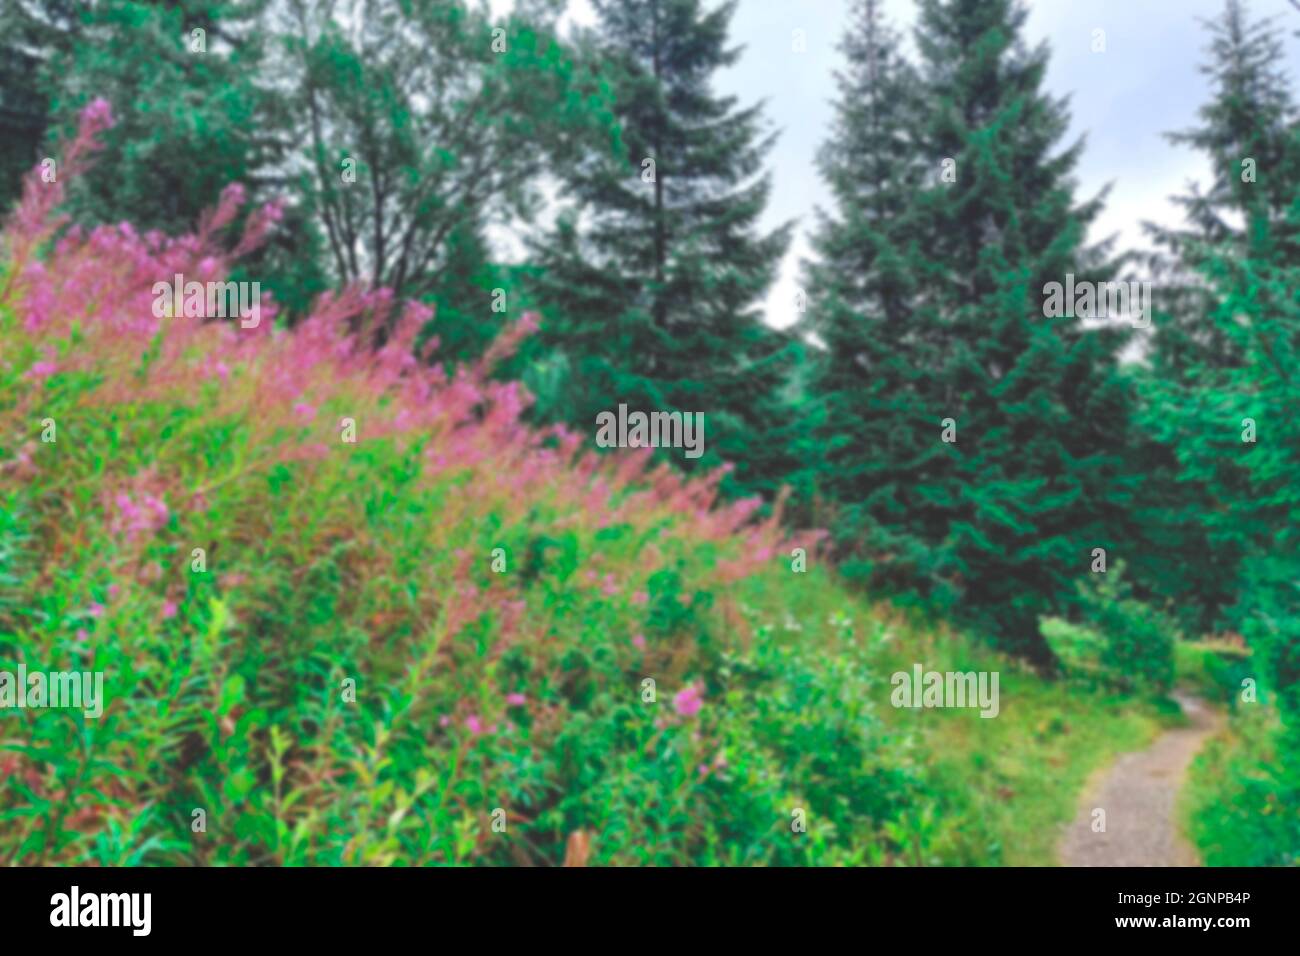 Blurred. Blooming chamaenerion angustifolium or Epilobium angustifolium or fireweed or willowherb against Tatra mountains in summer. Pink purple flowe Stock Photo